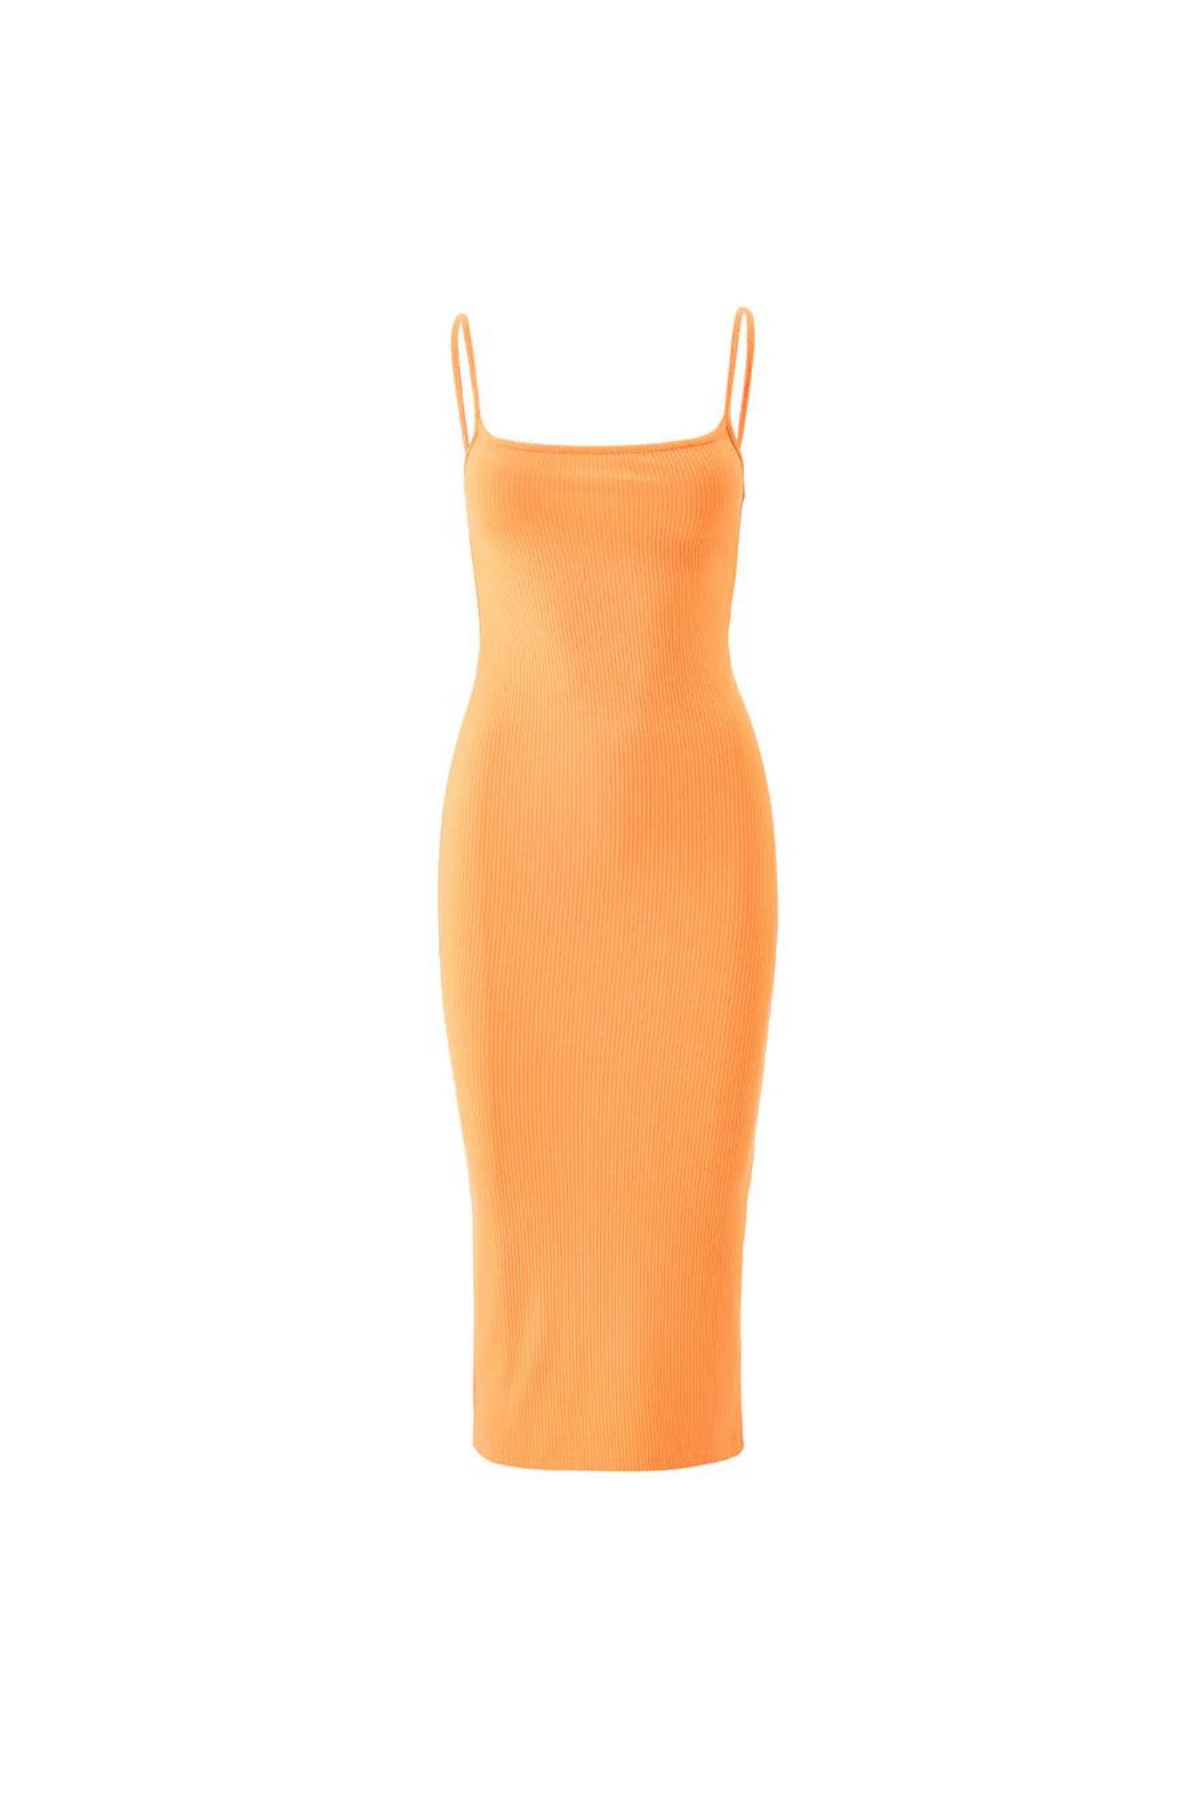 Melissa Odabash Riley Orange Dress